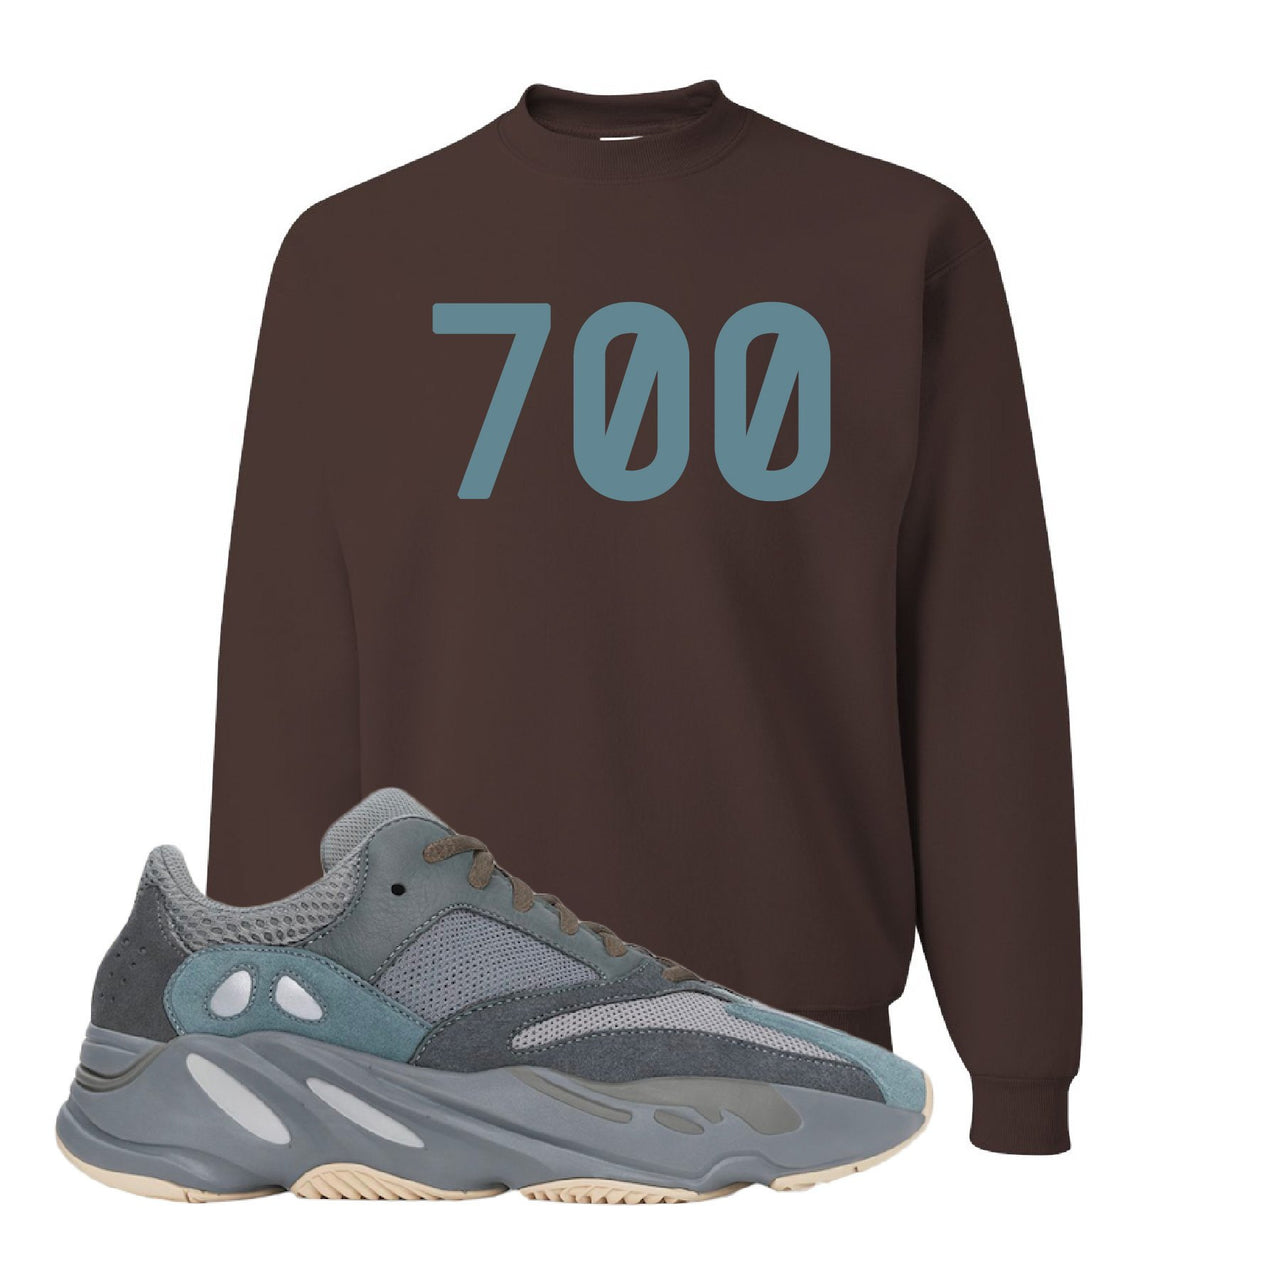 Yeezy Boost 700 Teal Blue 700 Chocolate Sneaker Hook Up Crewneck Sweatshirt